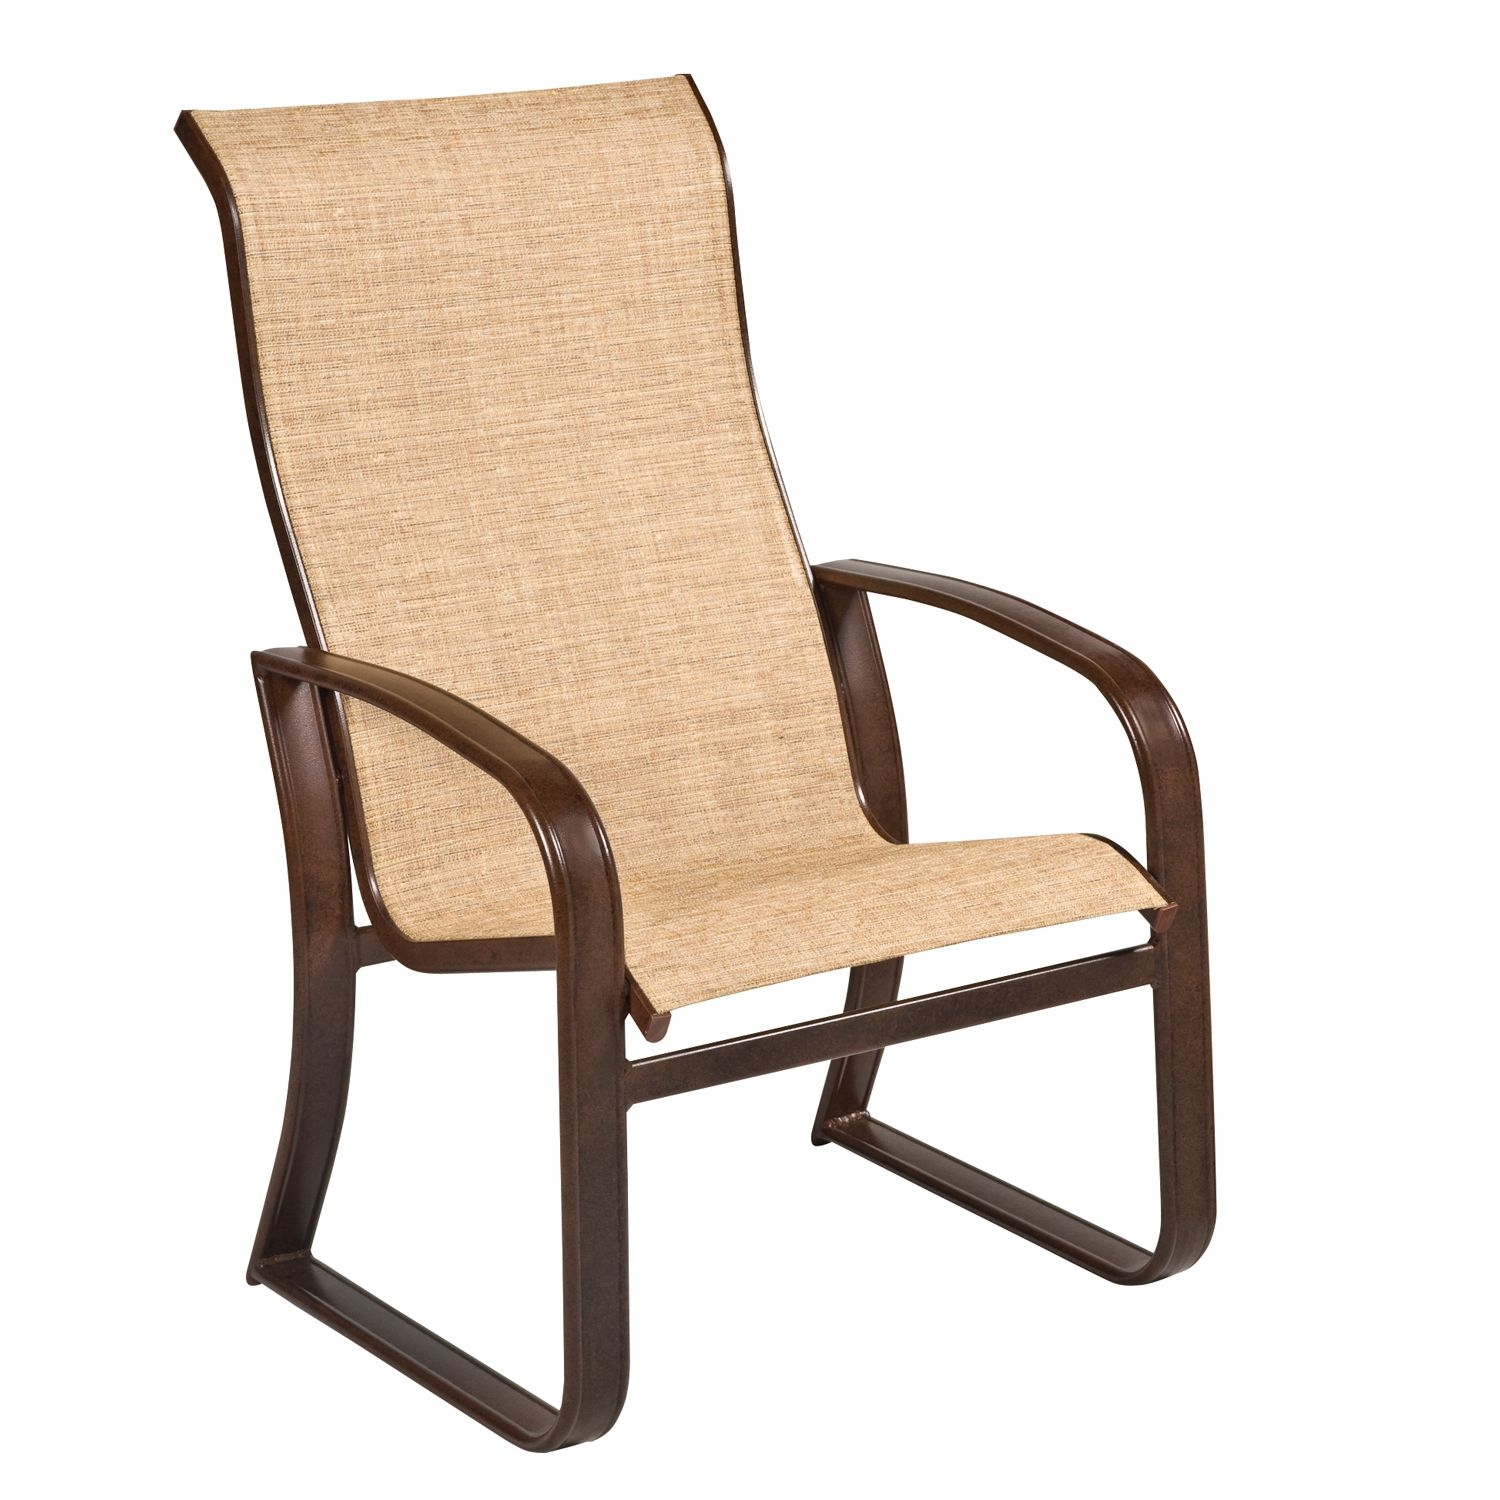 Woodard Cayman Isle Aluminum Sling High-Back Dining Chair